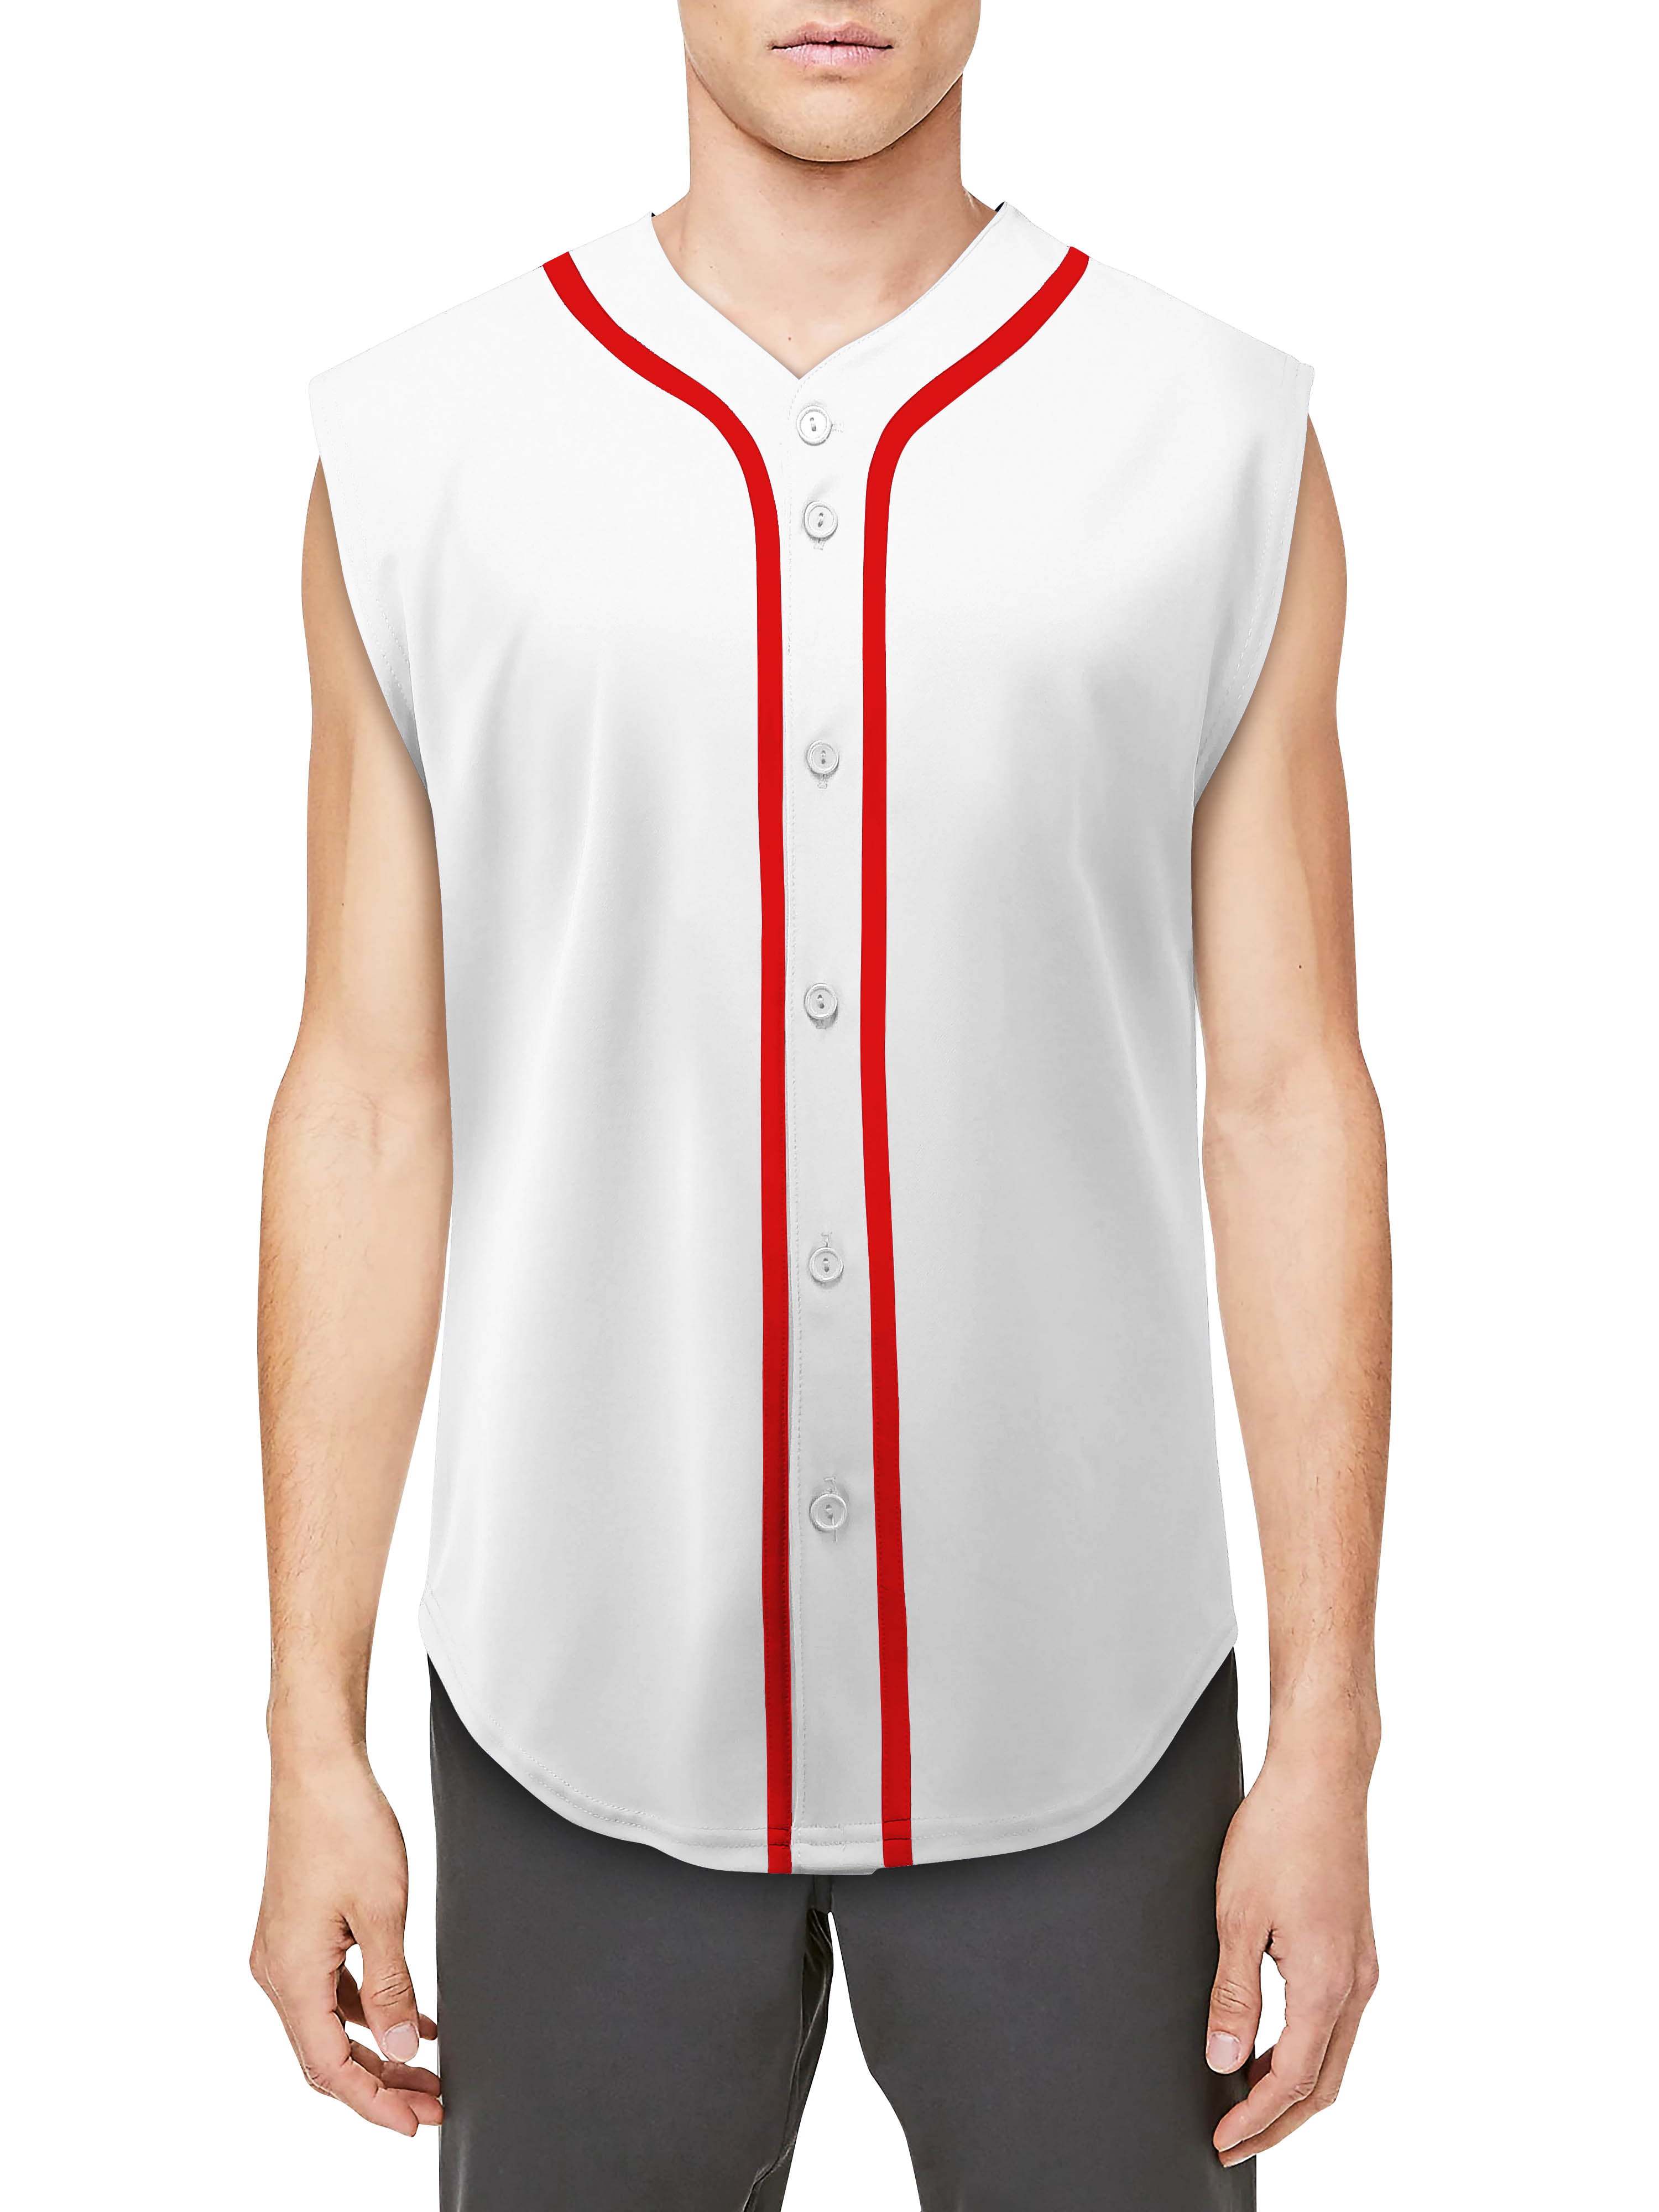 Hat and Beyond Men's Button Down Sleeveless Baseball Jersey Softball Tank Top, Size: Small, White